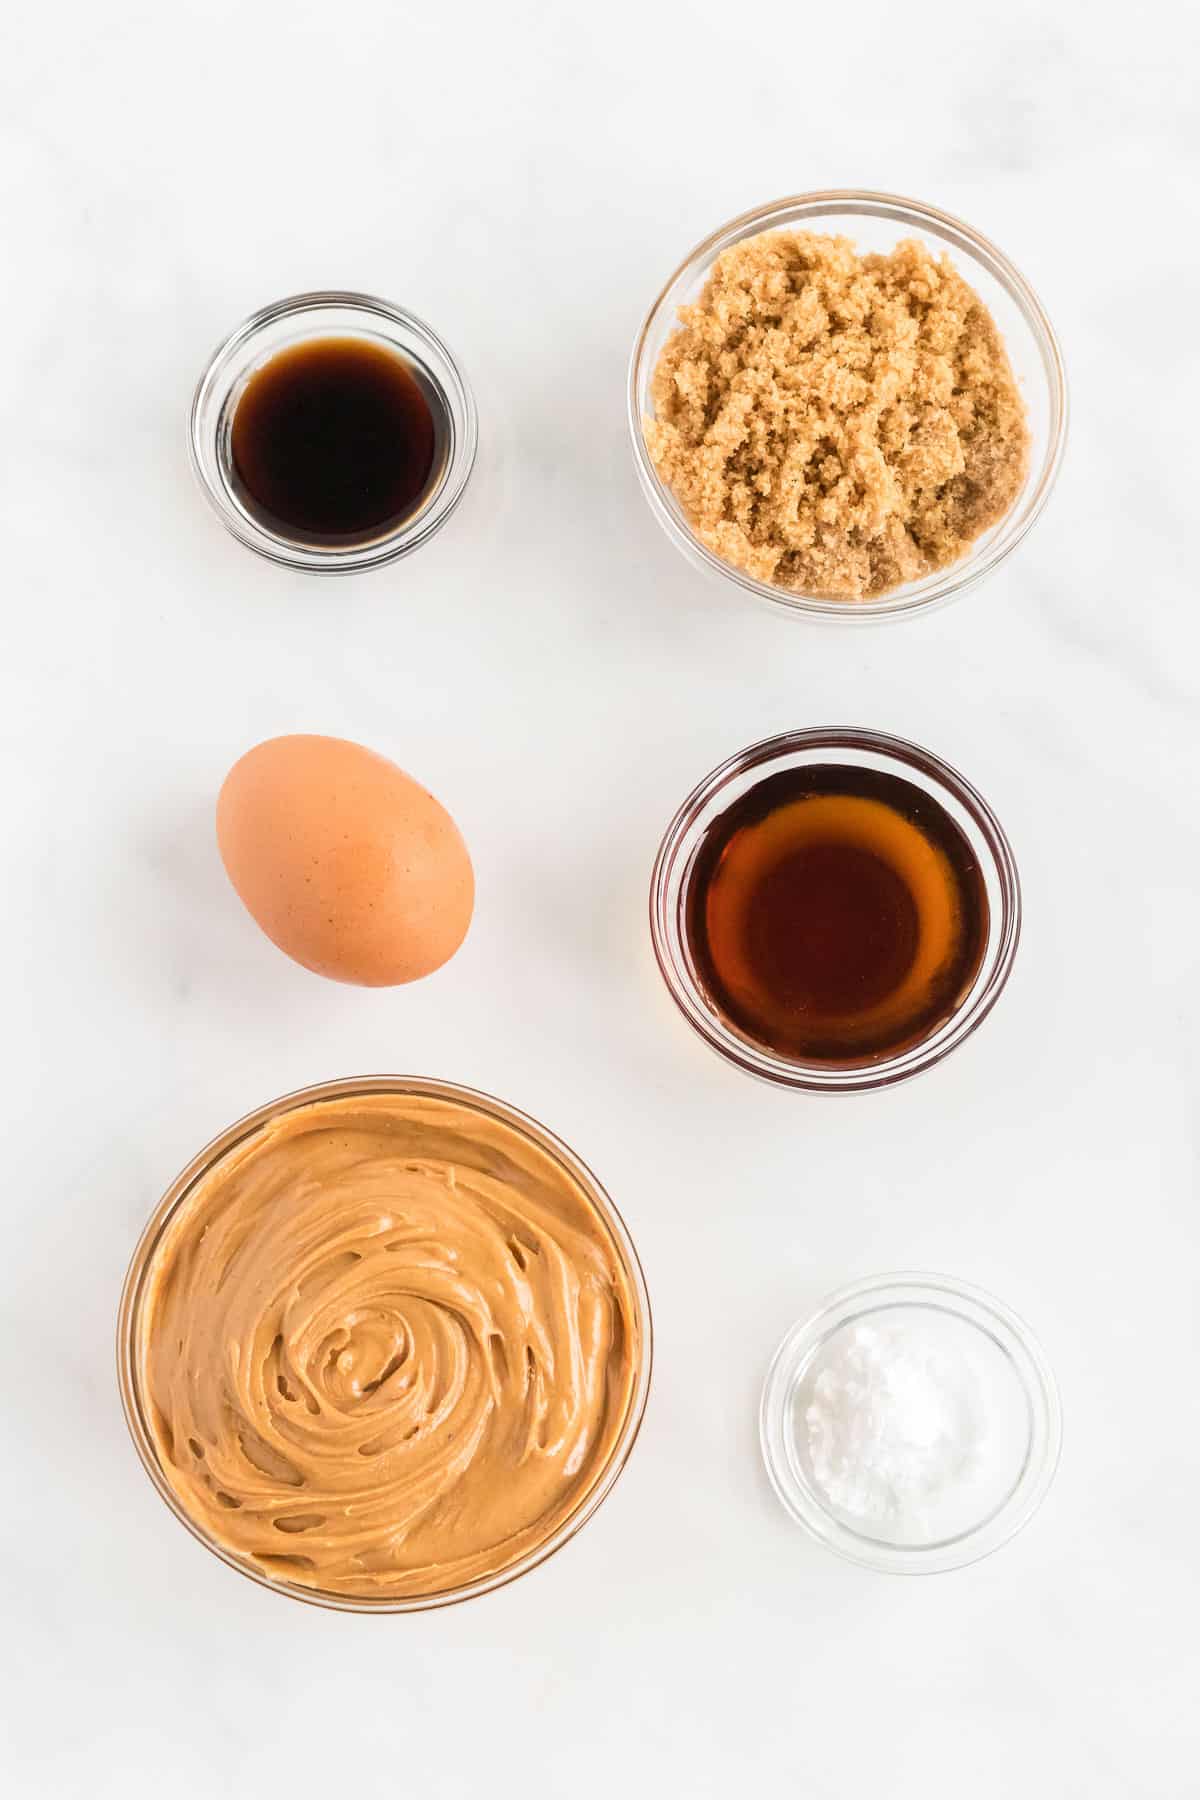 ingredients needed to make gluten free peanut butter cookies